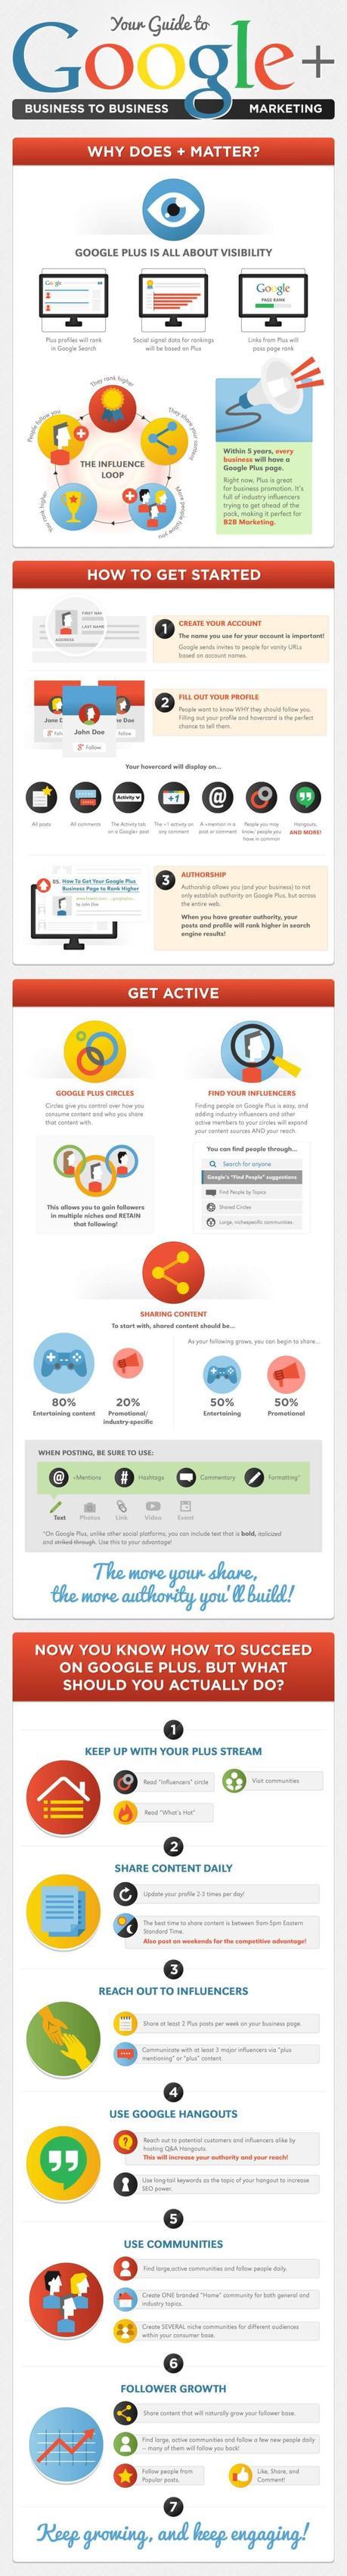 GooglePlus B2B infographic__comp